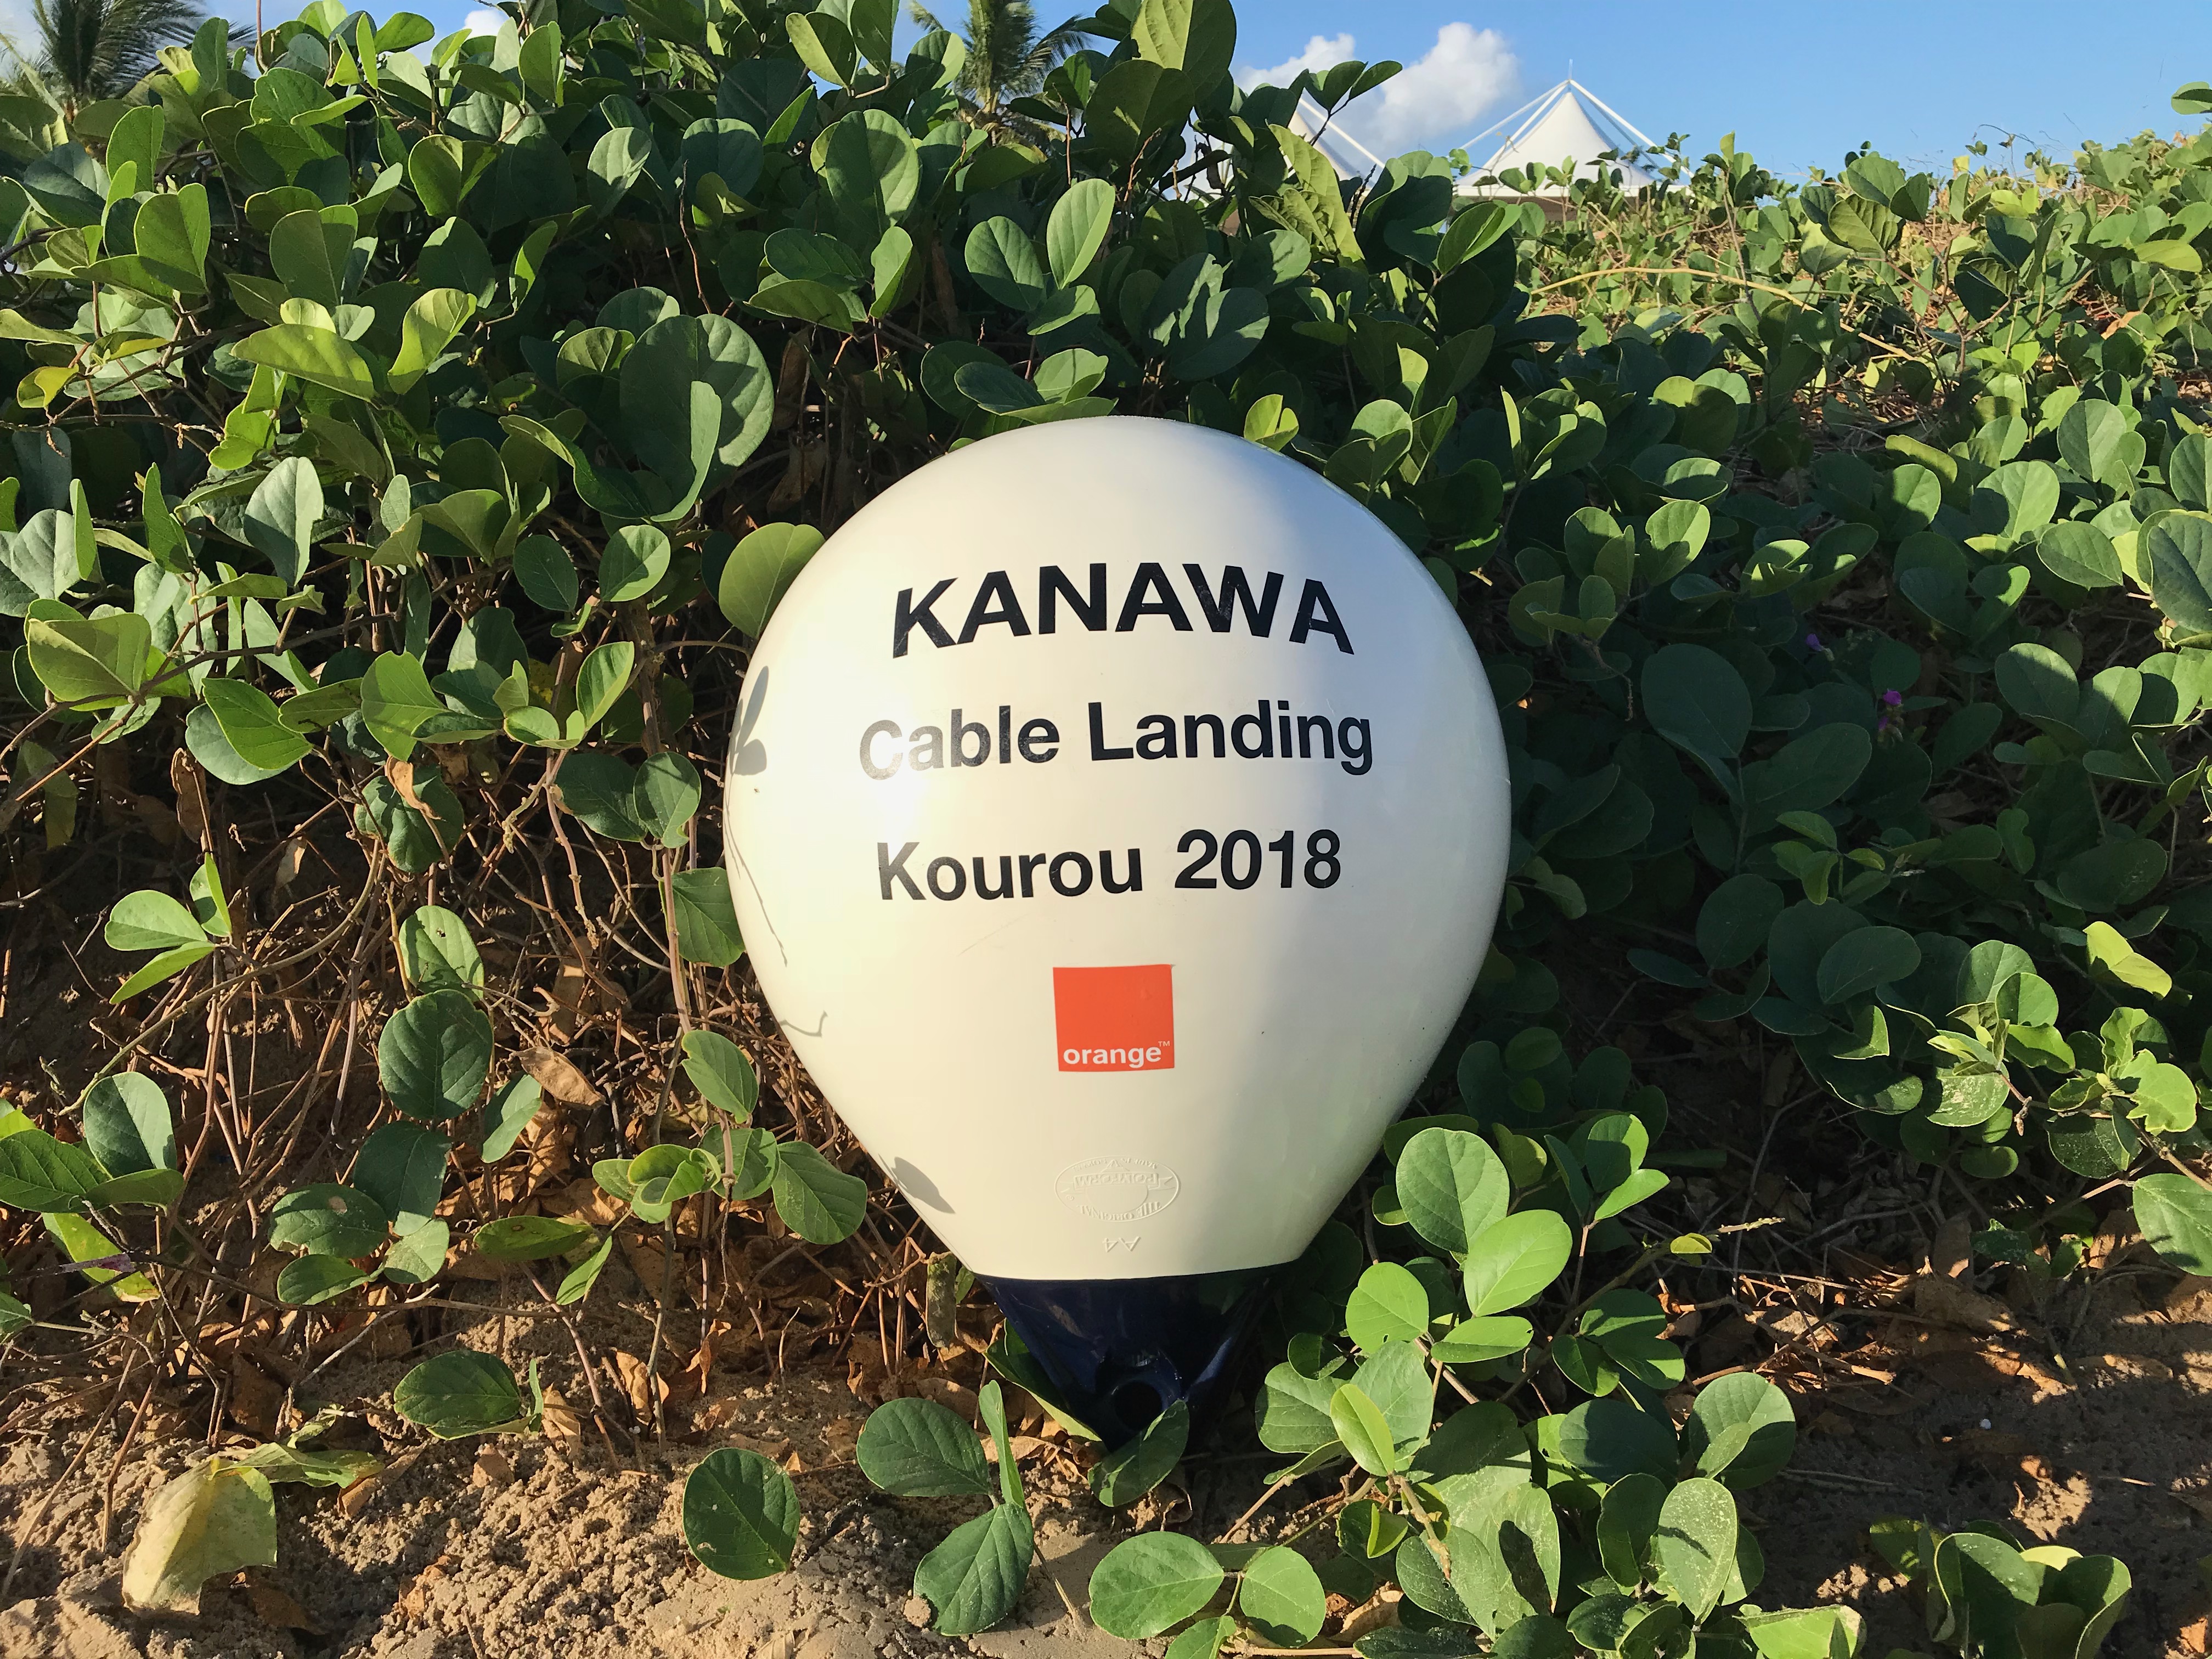 Le câble Kanawa a atterri en Guyane le 27 octobre 2018 ©Outremers360